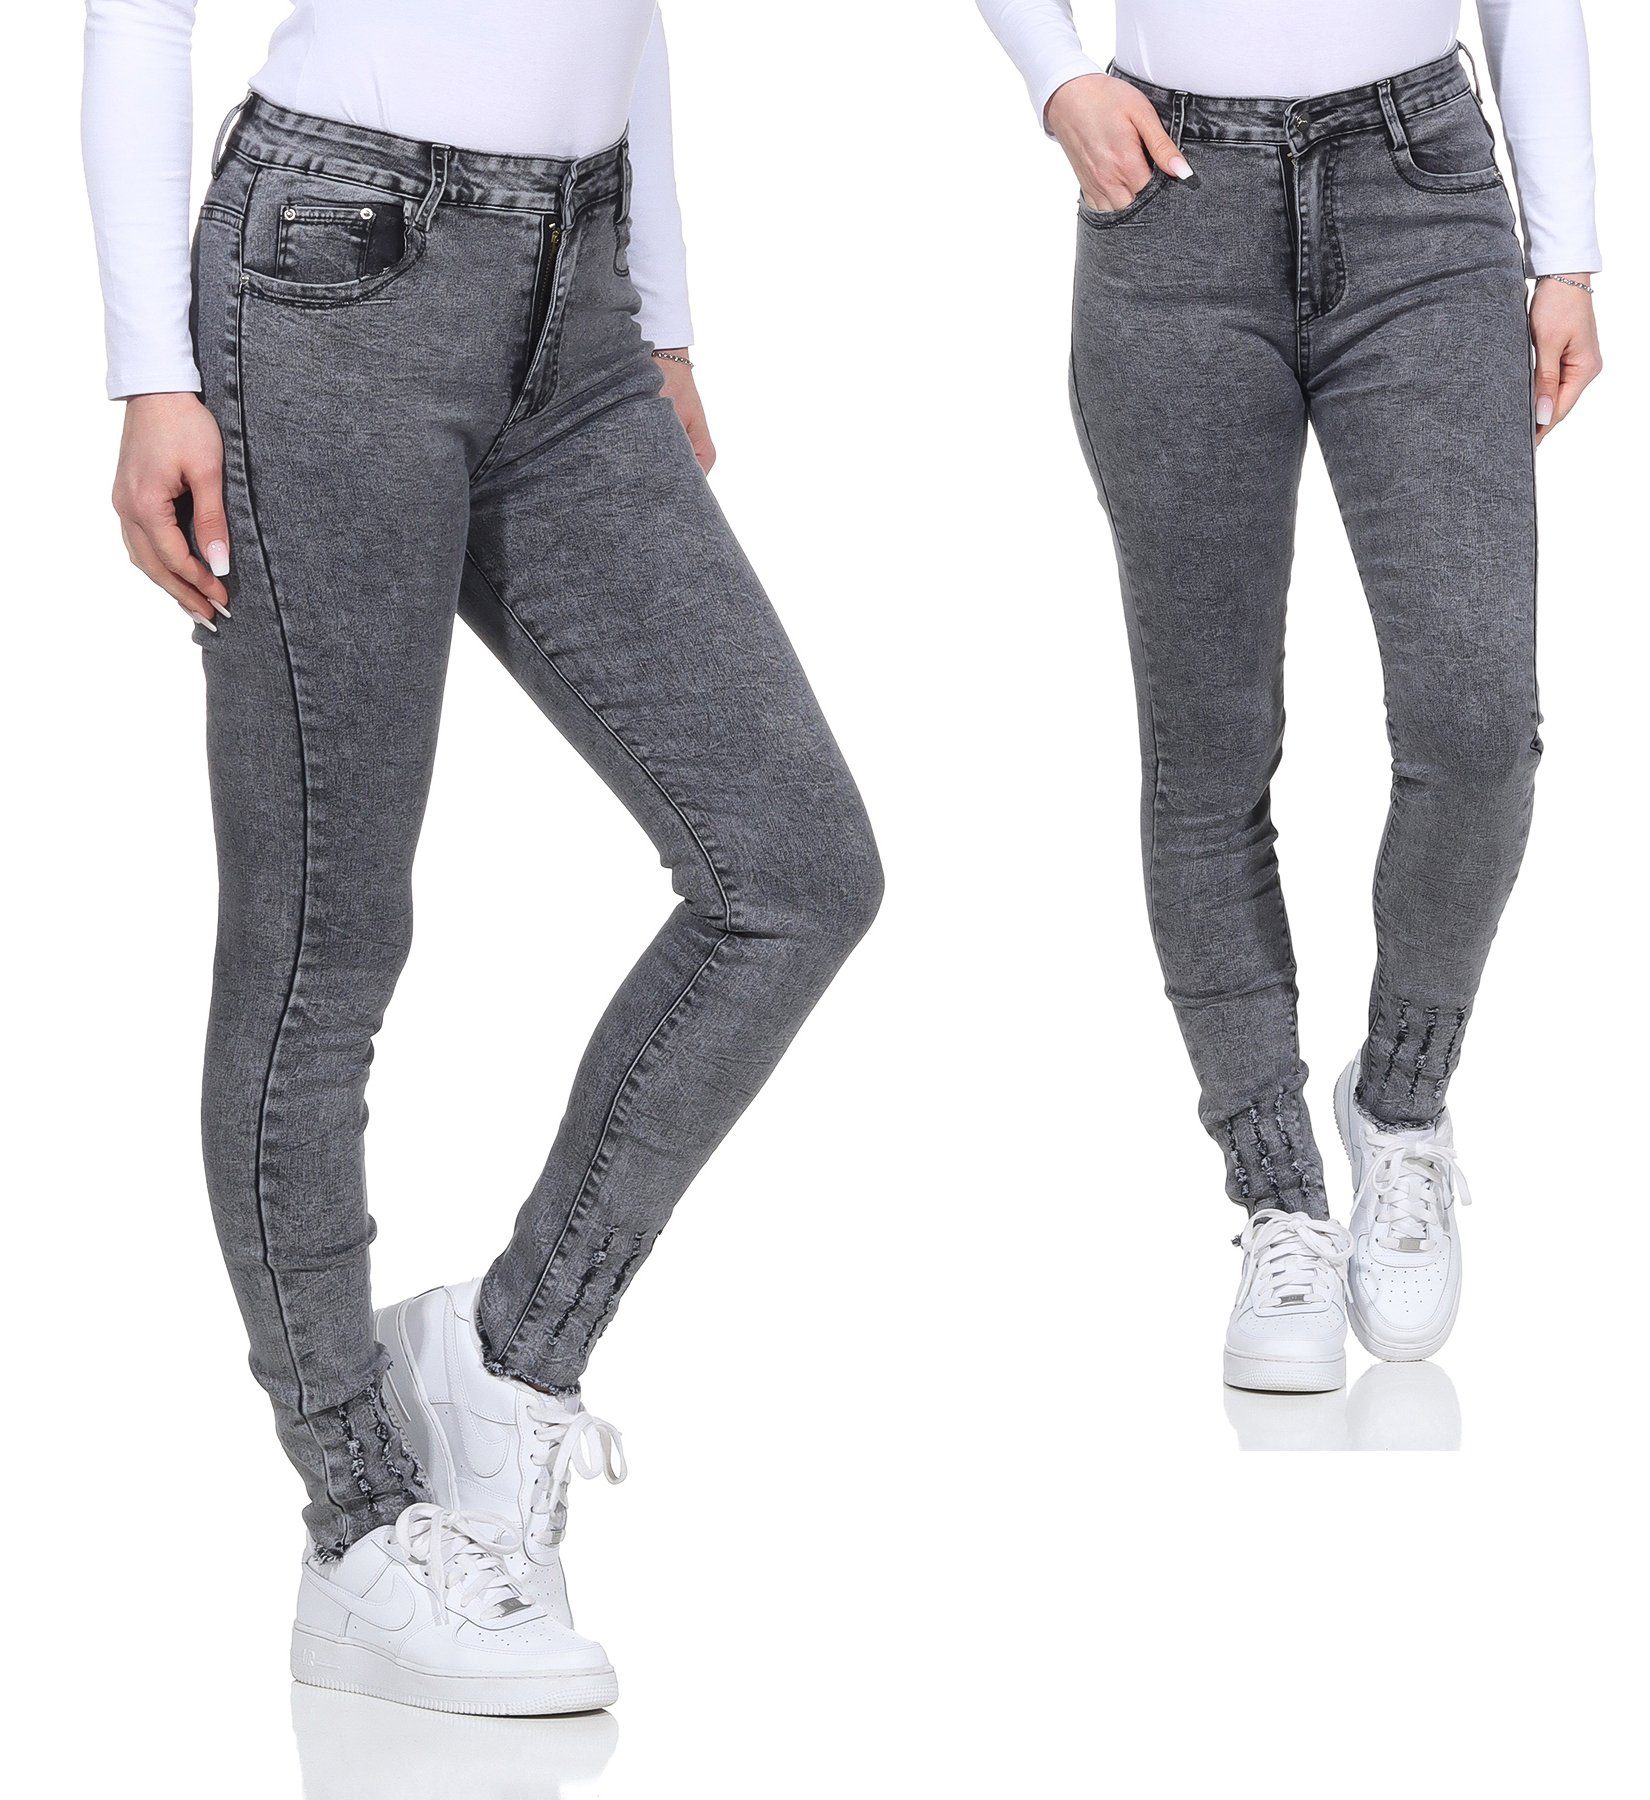 Aurela Damenmode 5-Pocket-Jeans Jeanshosen Look Destroyed Distressed Stretch moderner Jeans Damen für Grau Look